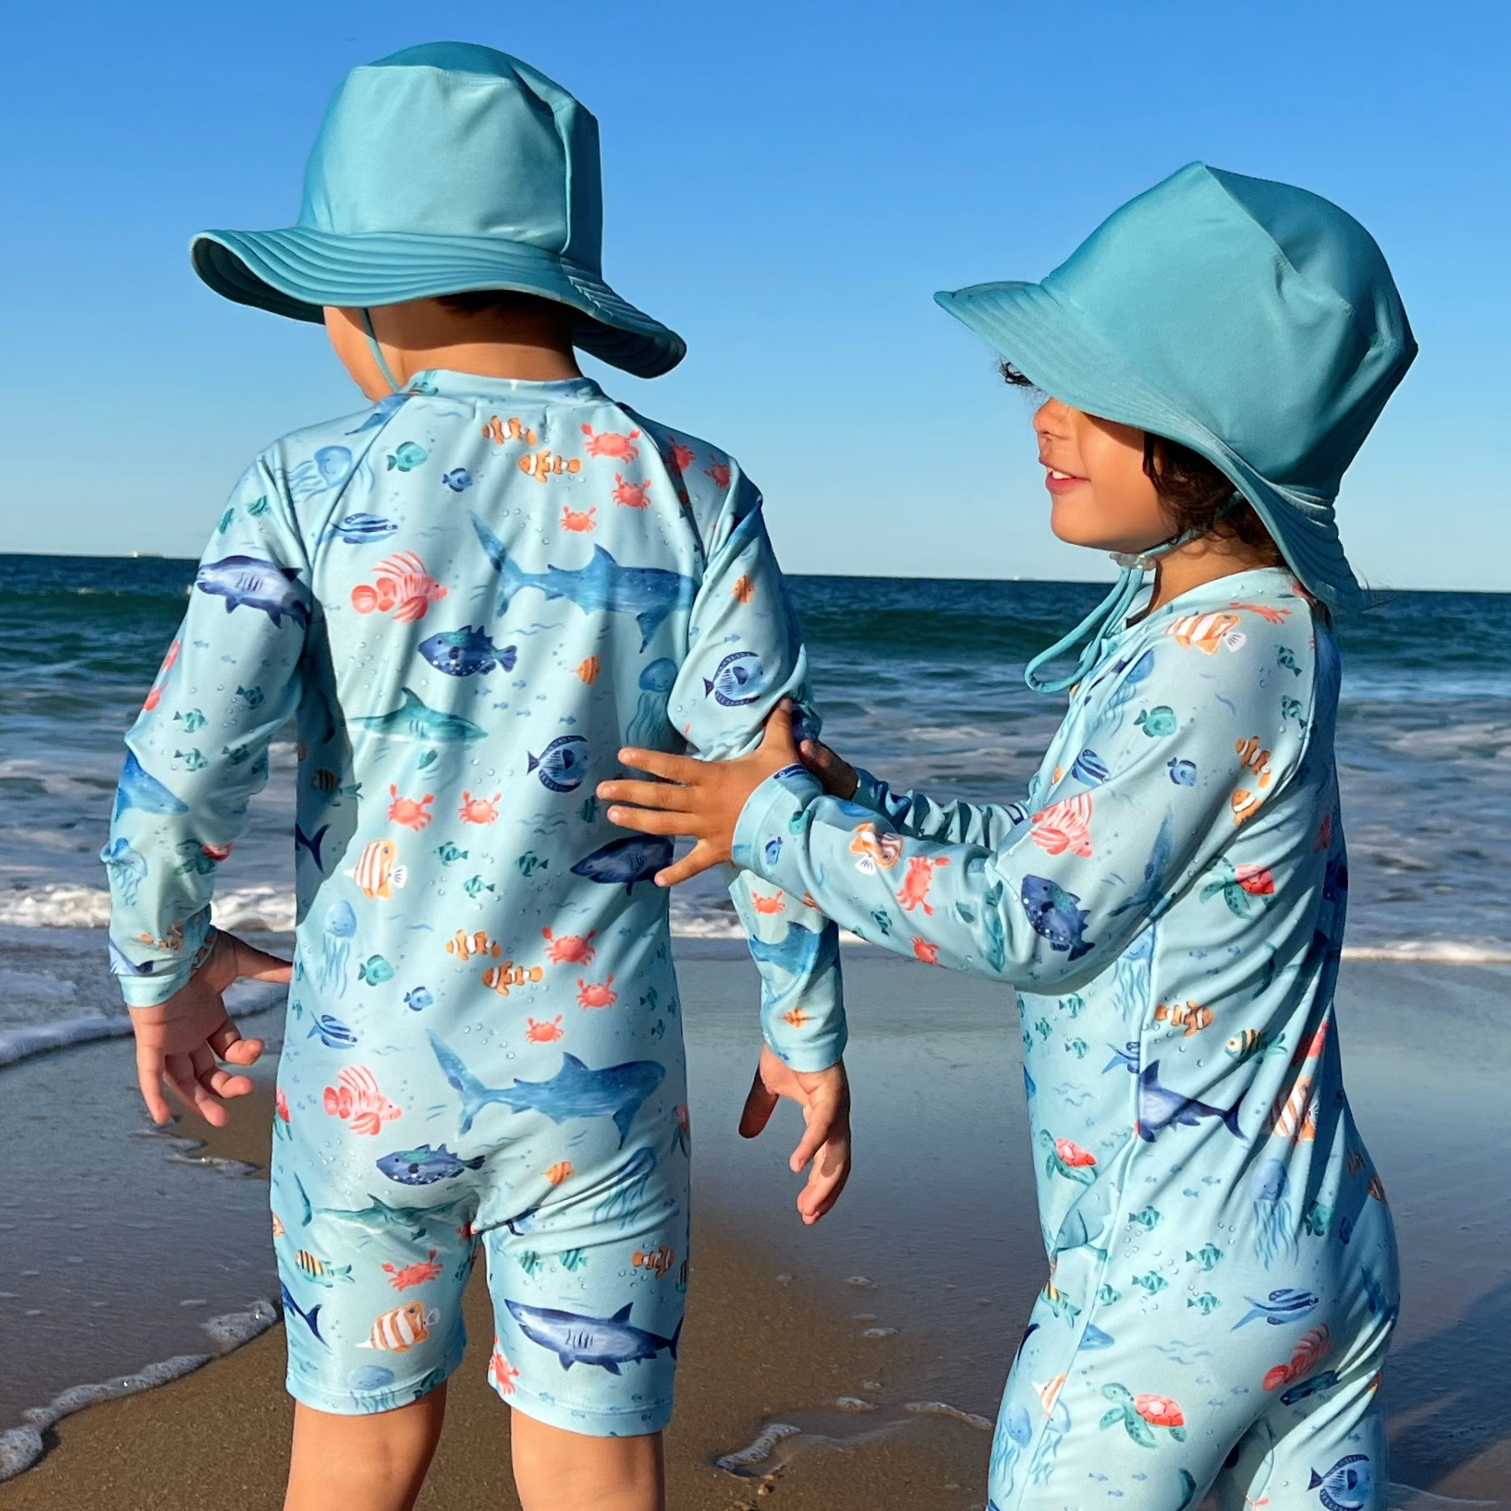 Children in swimwear and hats at beach